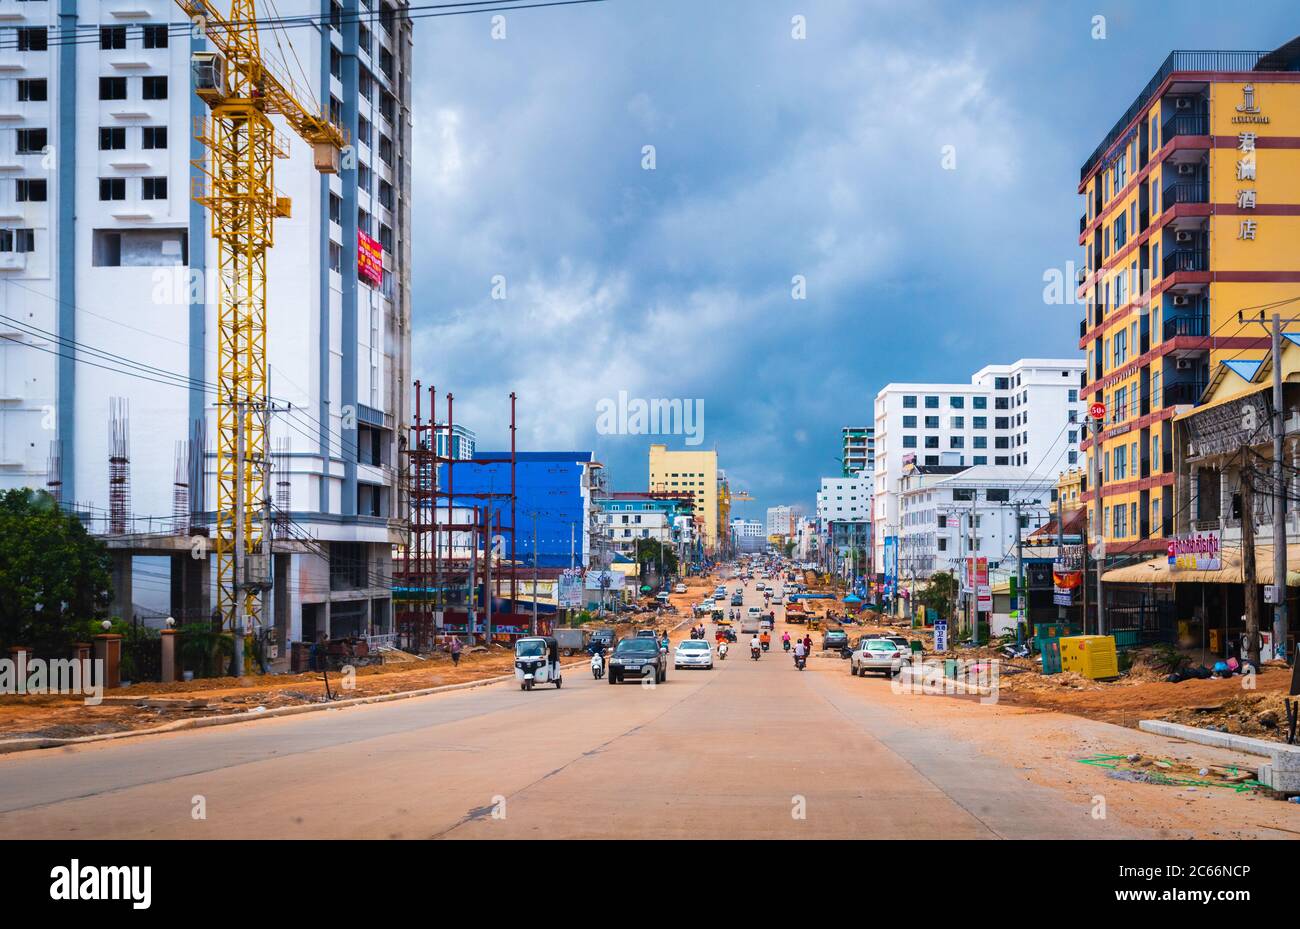 Sihanoukville, Cambodia- July 06, 2020: Traffic on city road under construction during coronavirus pandemic. High rise building under development alon Stock Photo